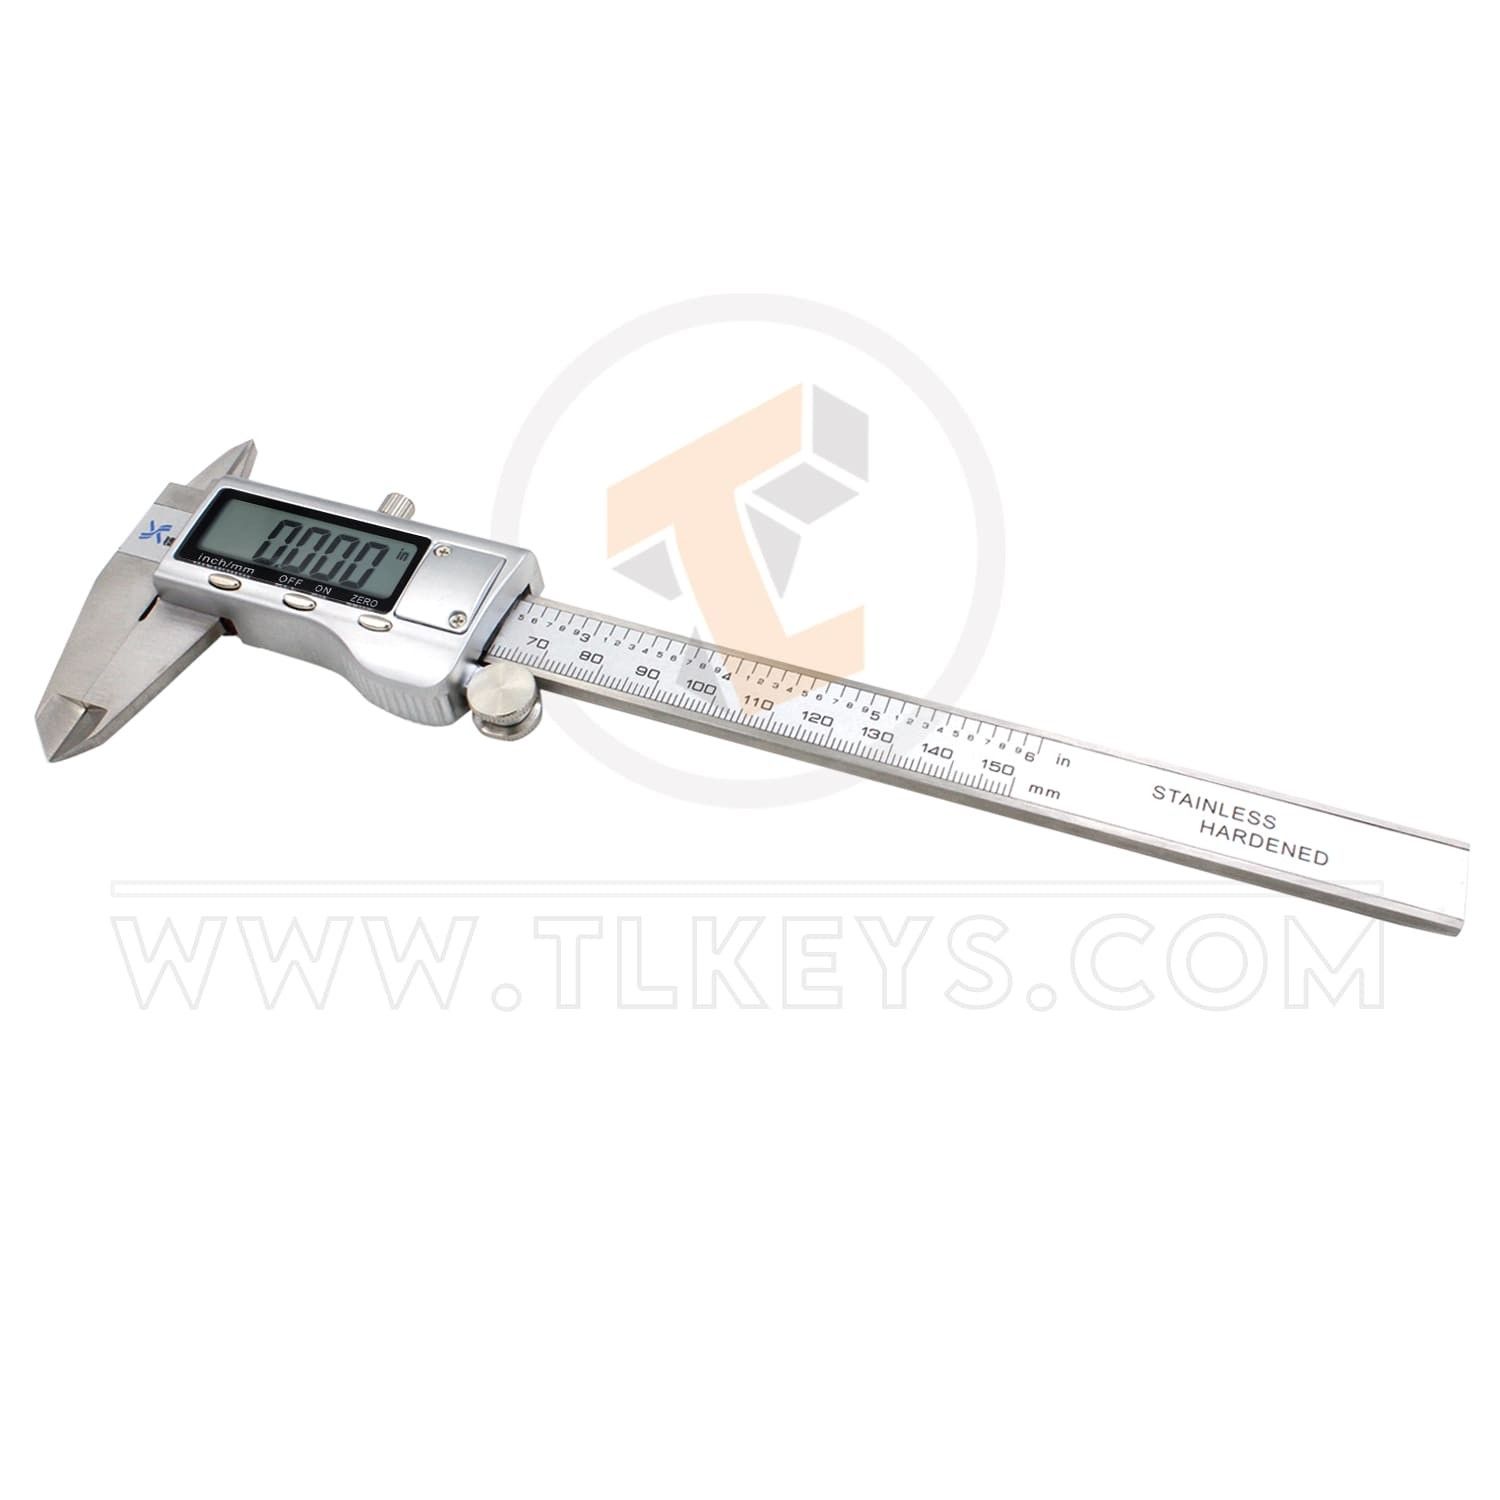 Electronic 0-150 Micrometer Digital Caliper Status Aftermarket